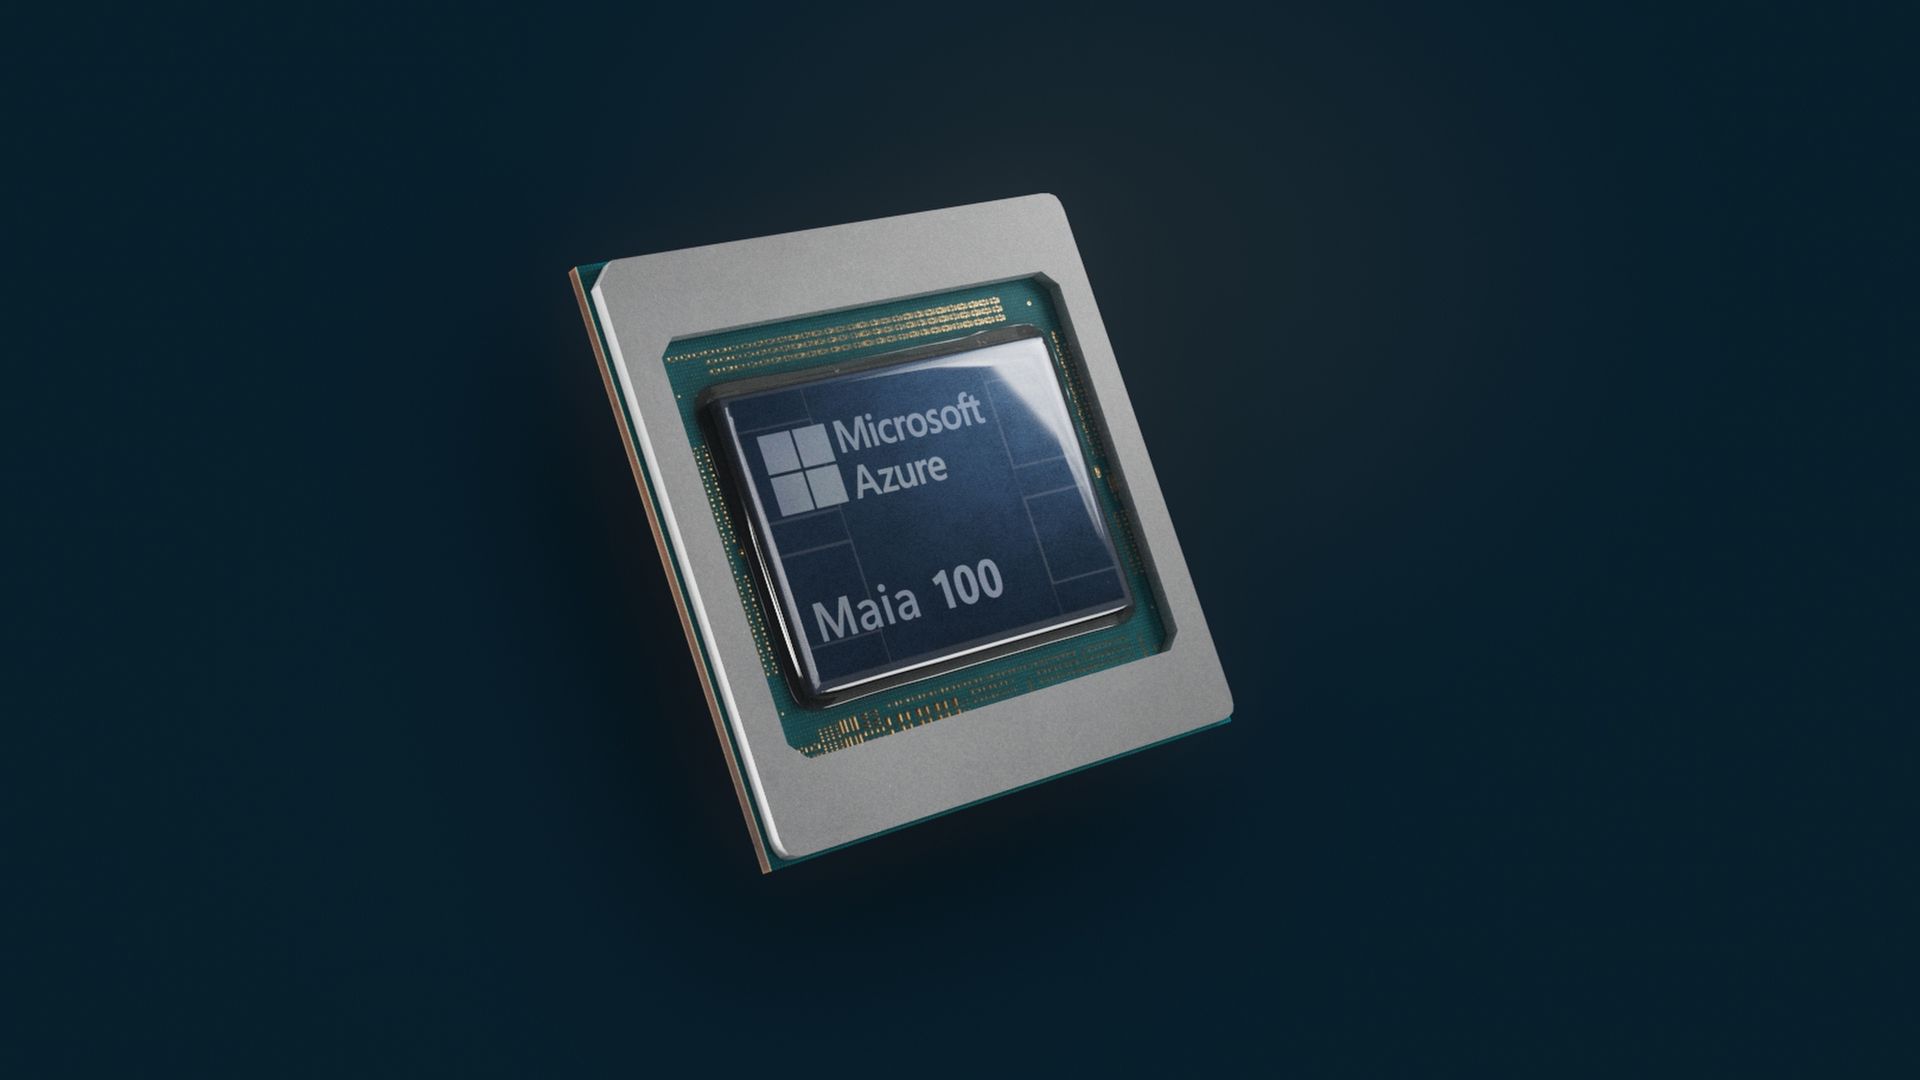 Microsoft's Maia 100 processor